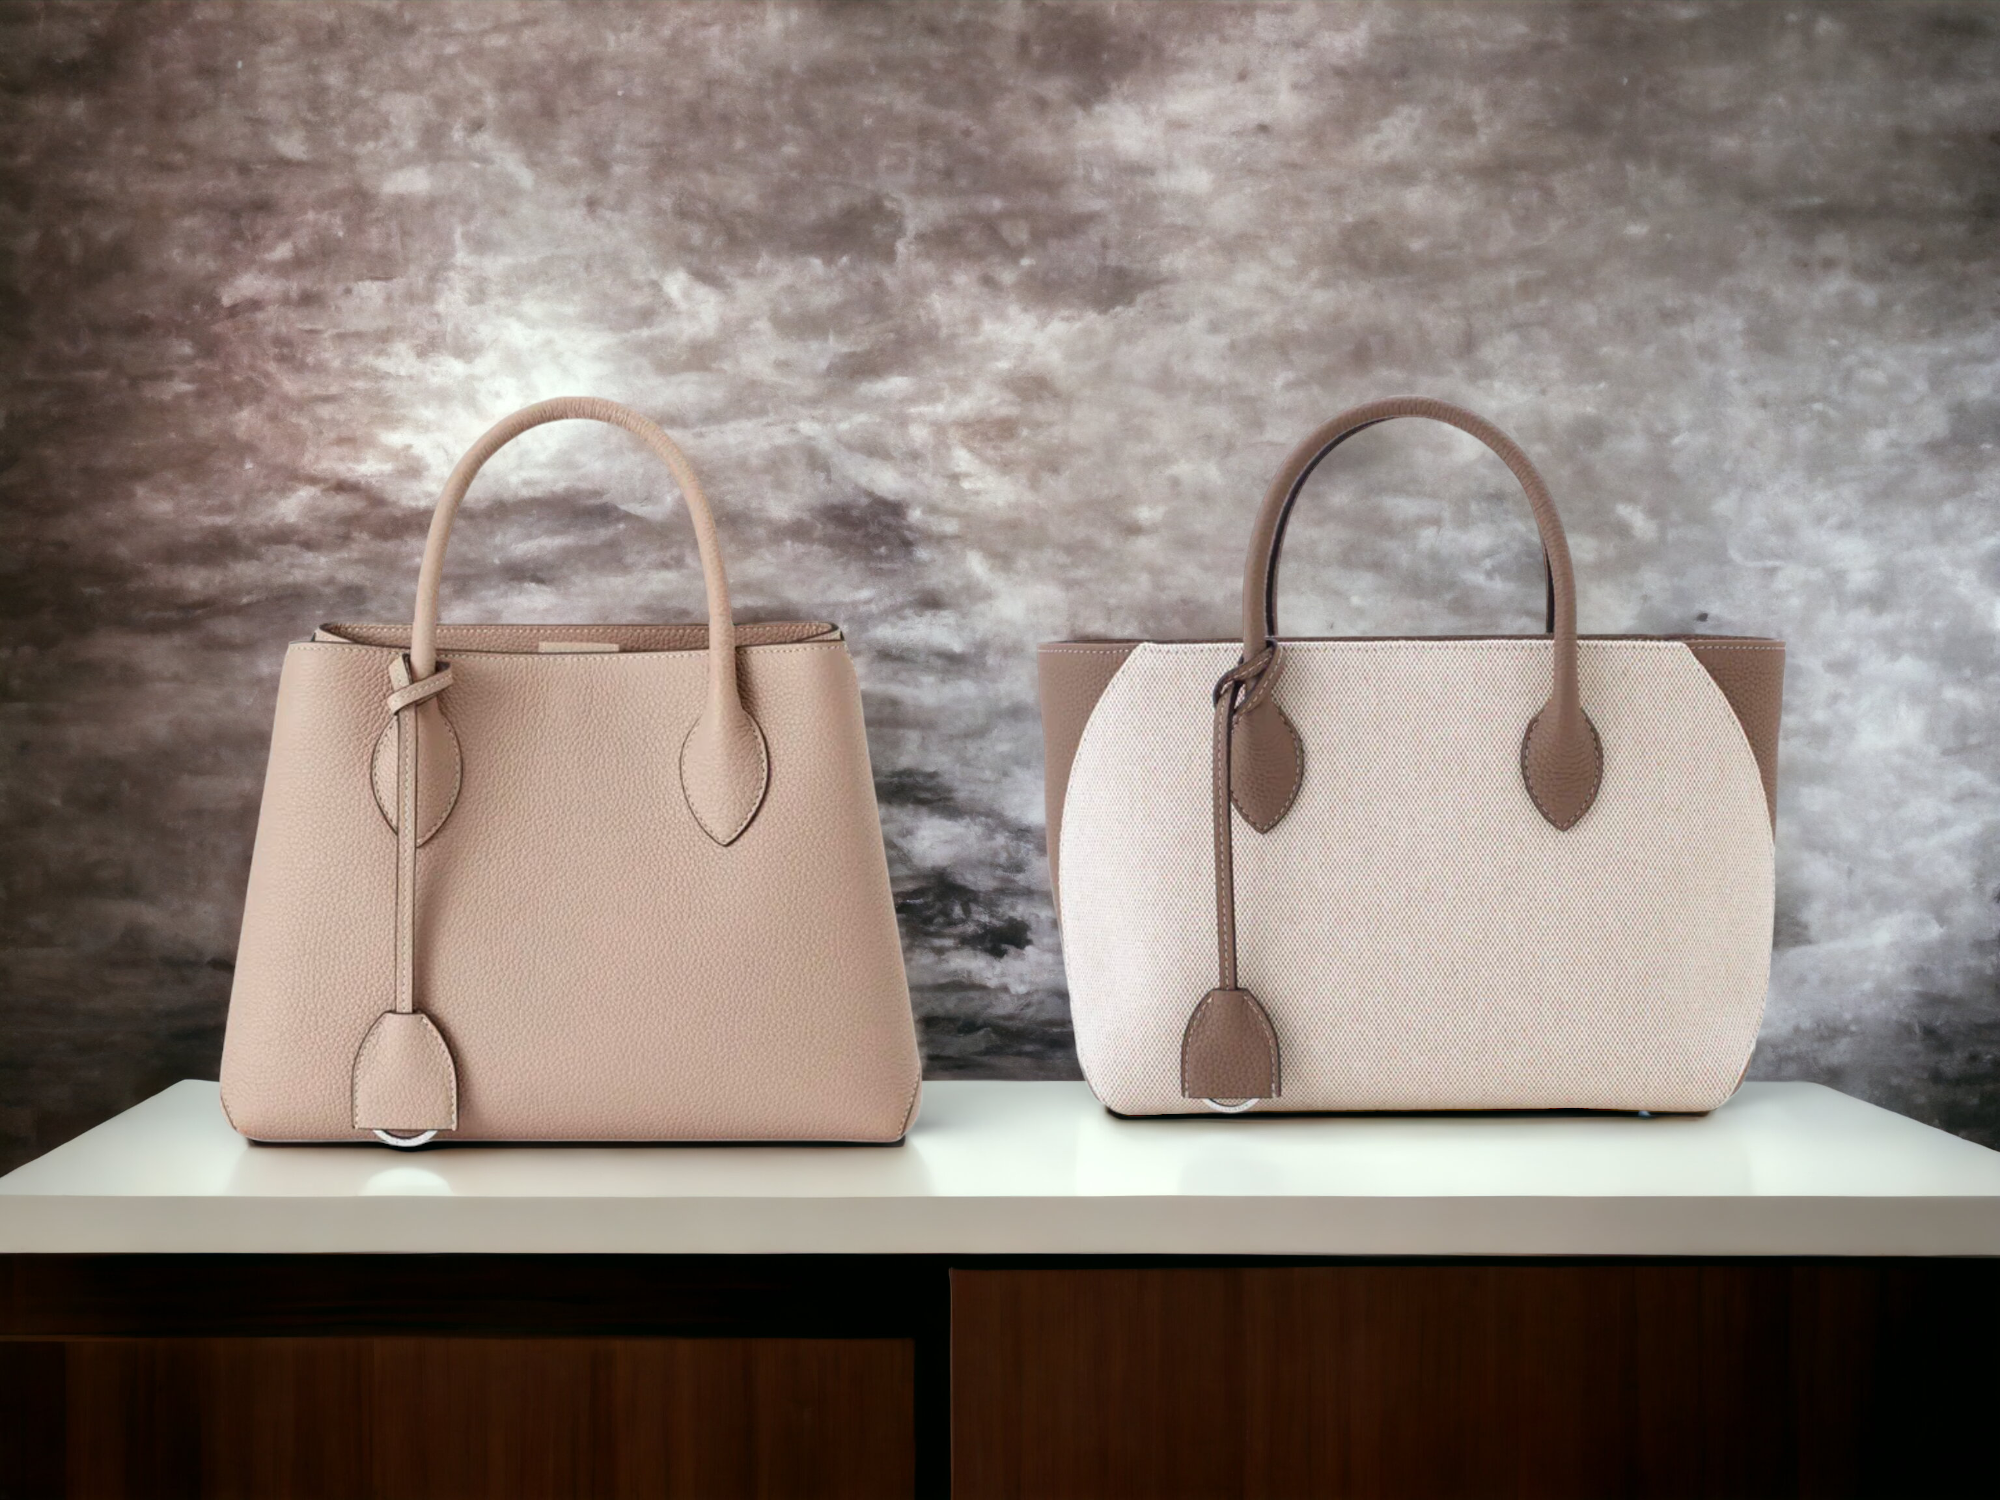 Elegancka skórzana torebka vs. materiałowa torba marki BONAVENTURA na gładkim tle, symbolizująca luksus i jakość.